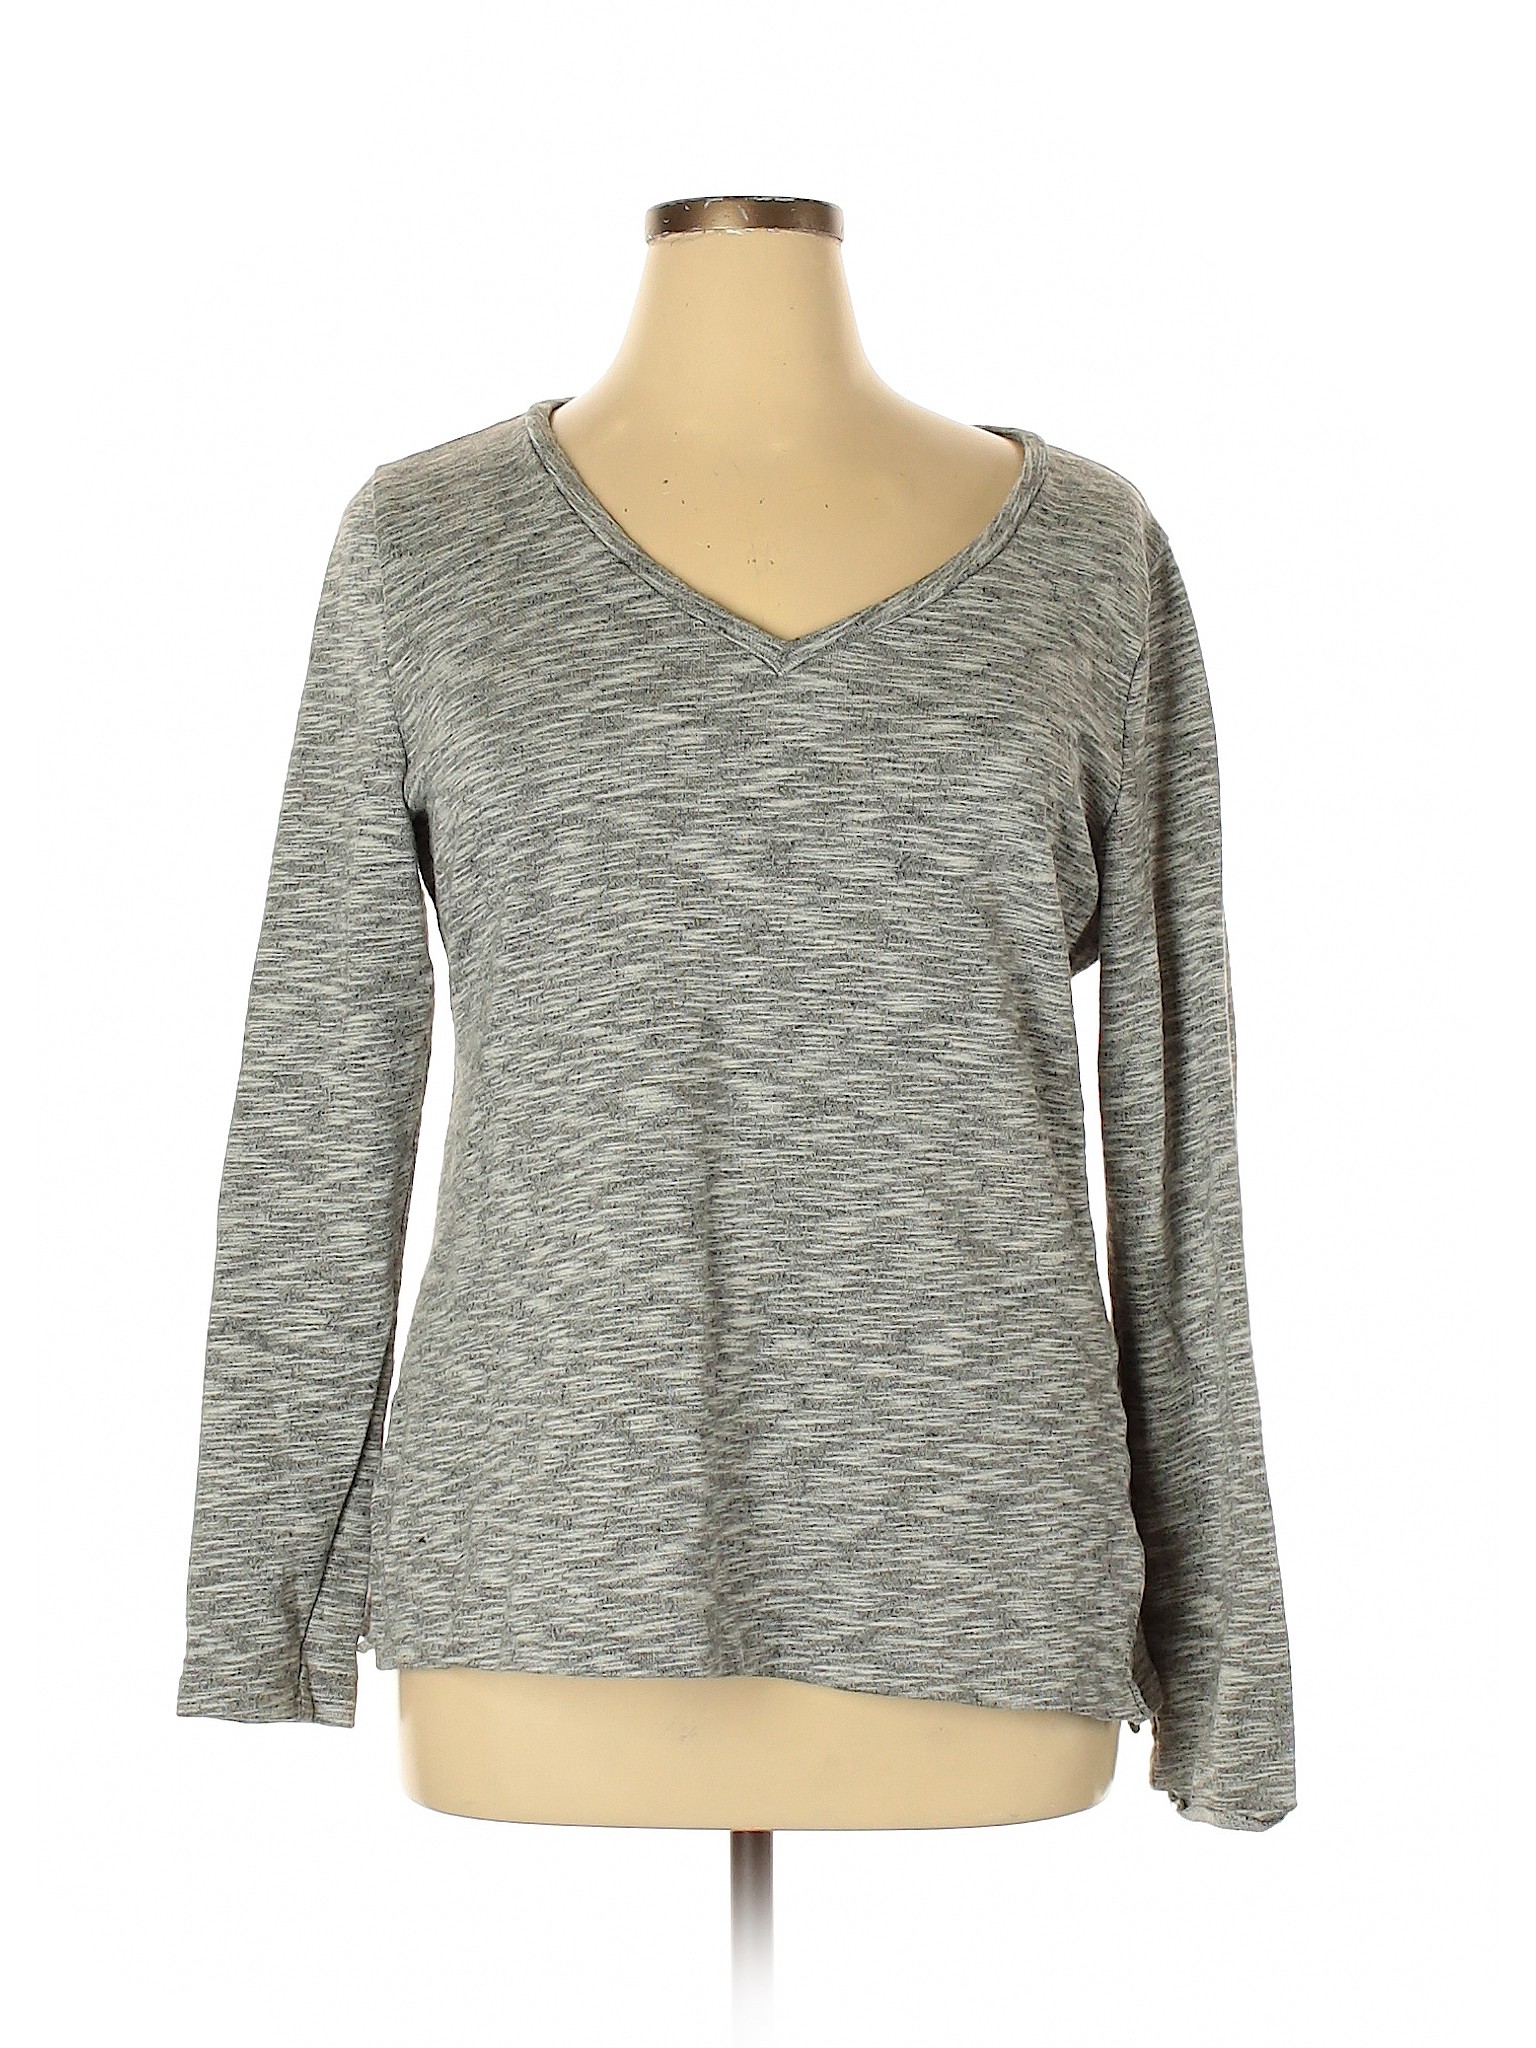 J.Crew Mercantile Women Gray Long Sleeve T-Shirt XL | eBay